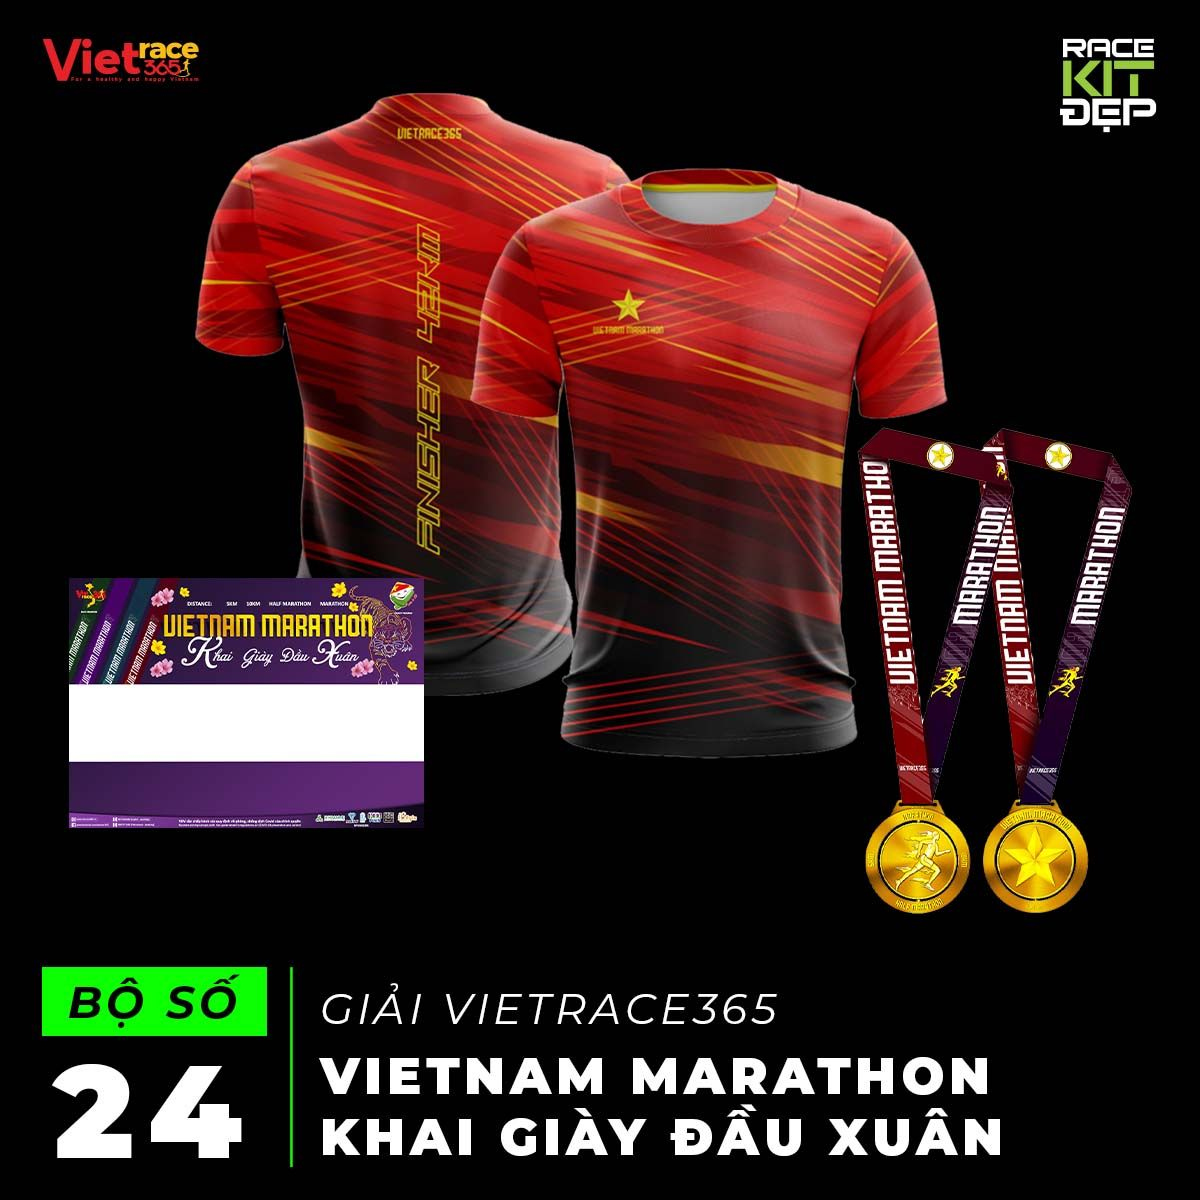 Vietnam Marathon